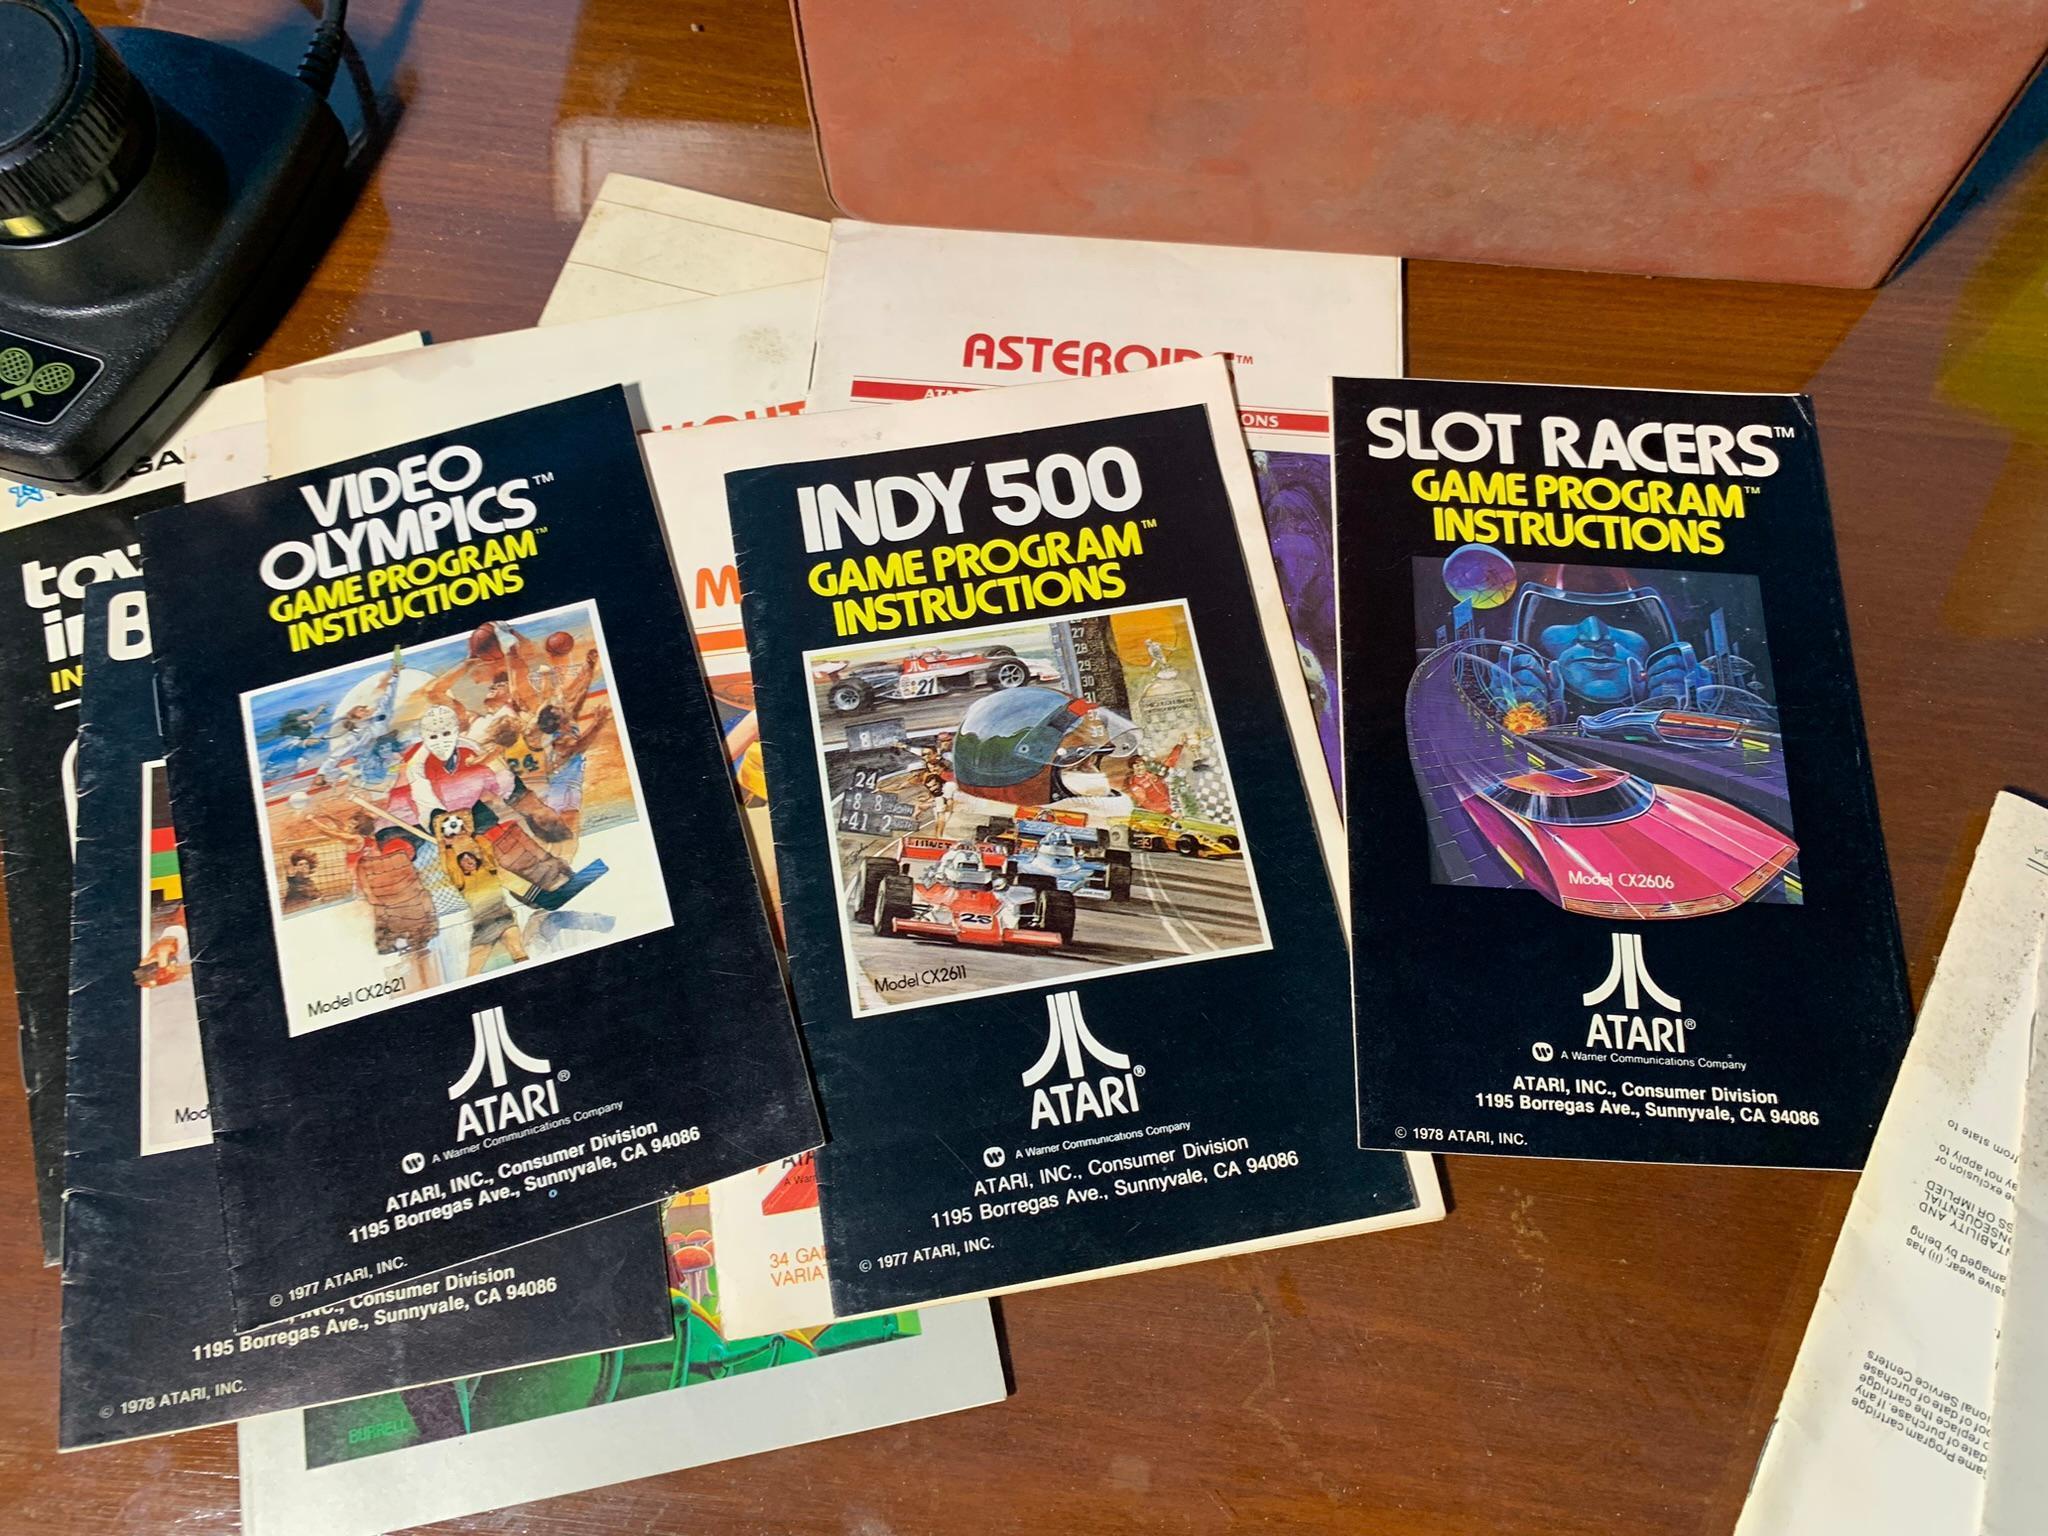 Atari Game System Accessories & Games